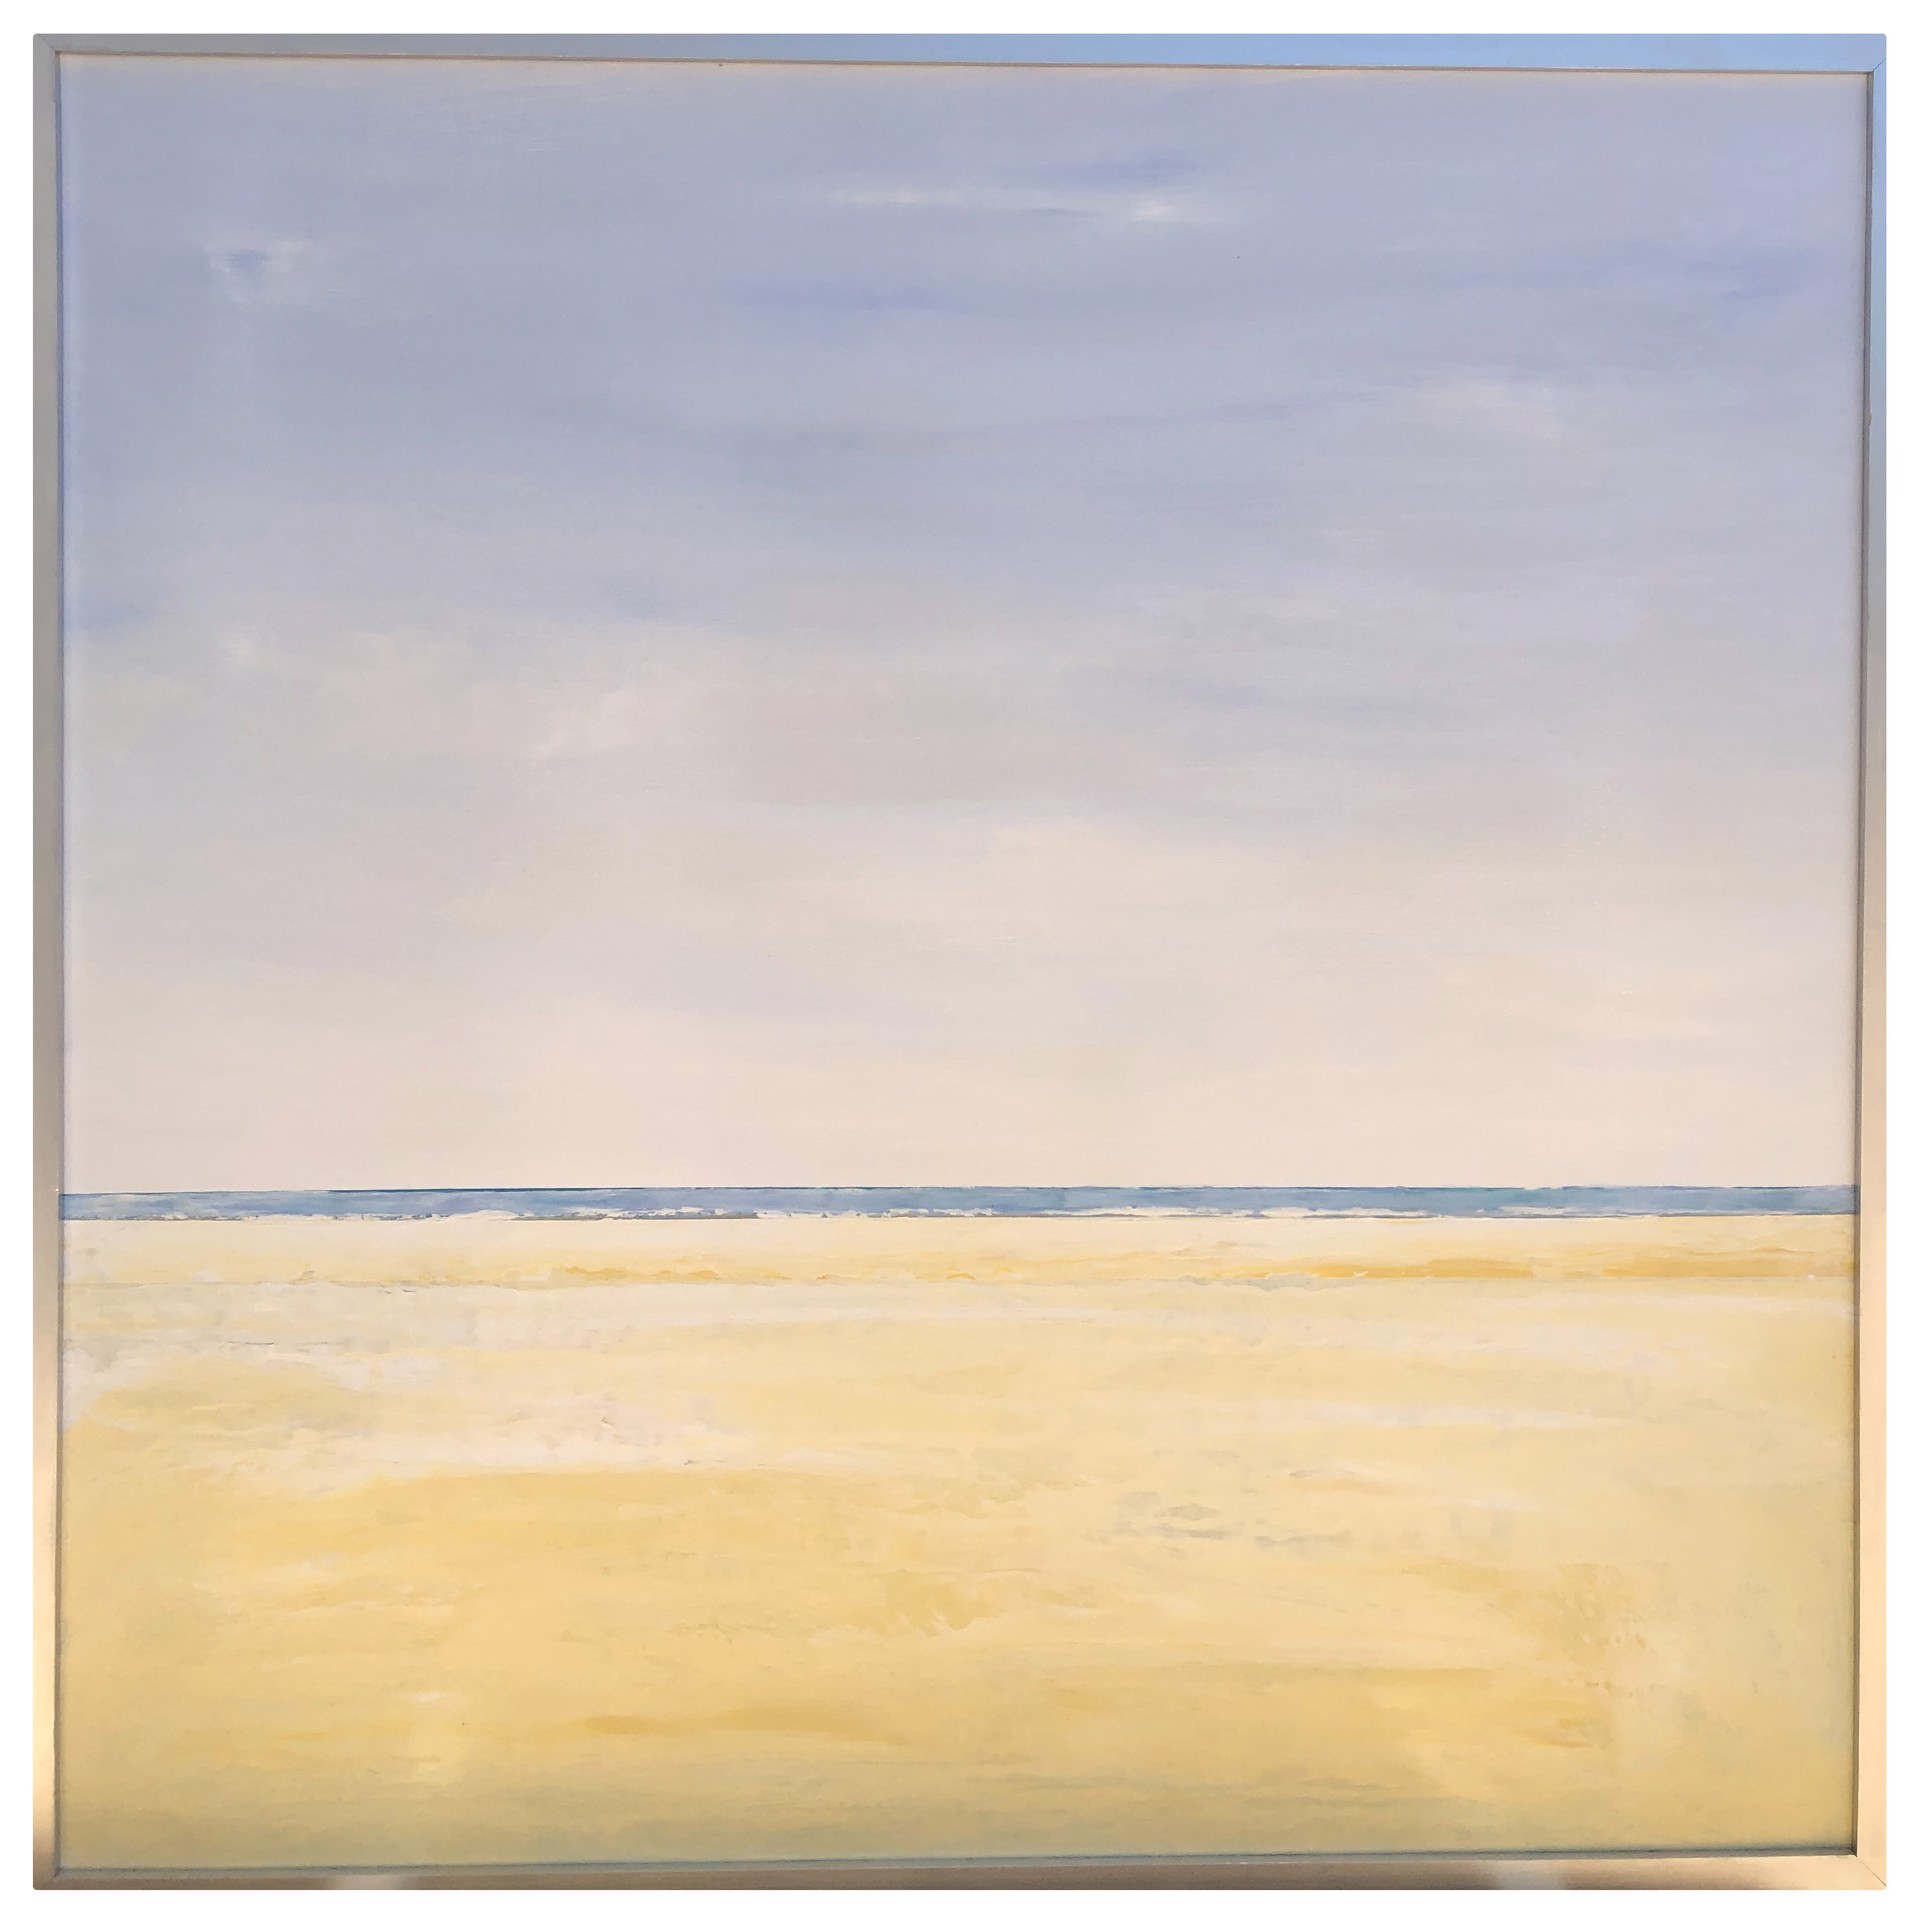 Seascape with Beach by John Narron